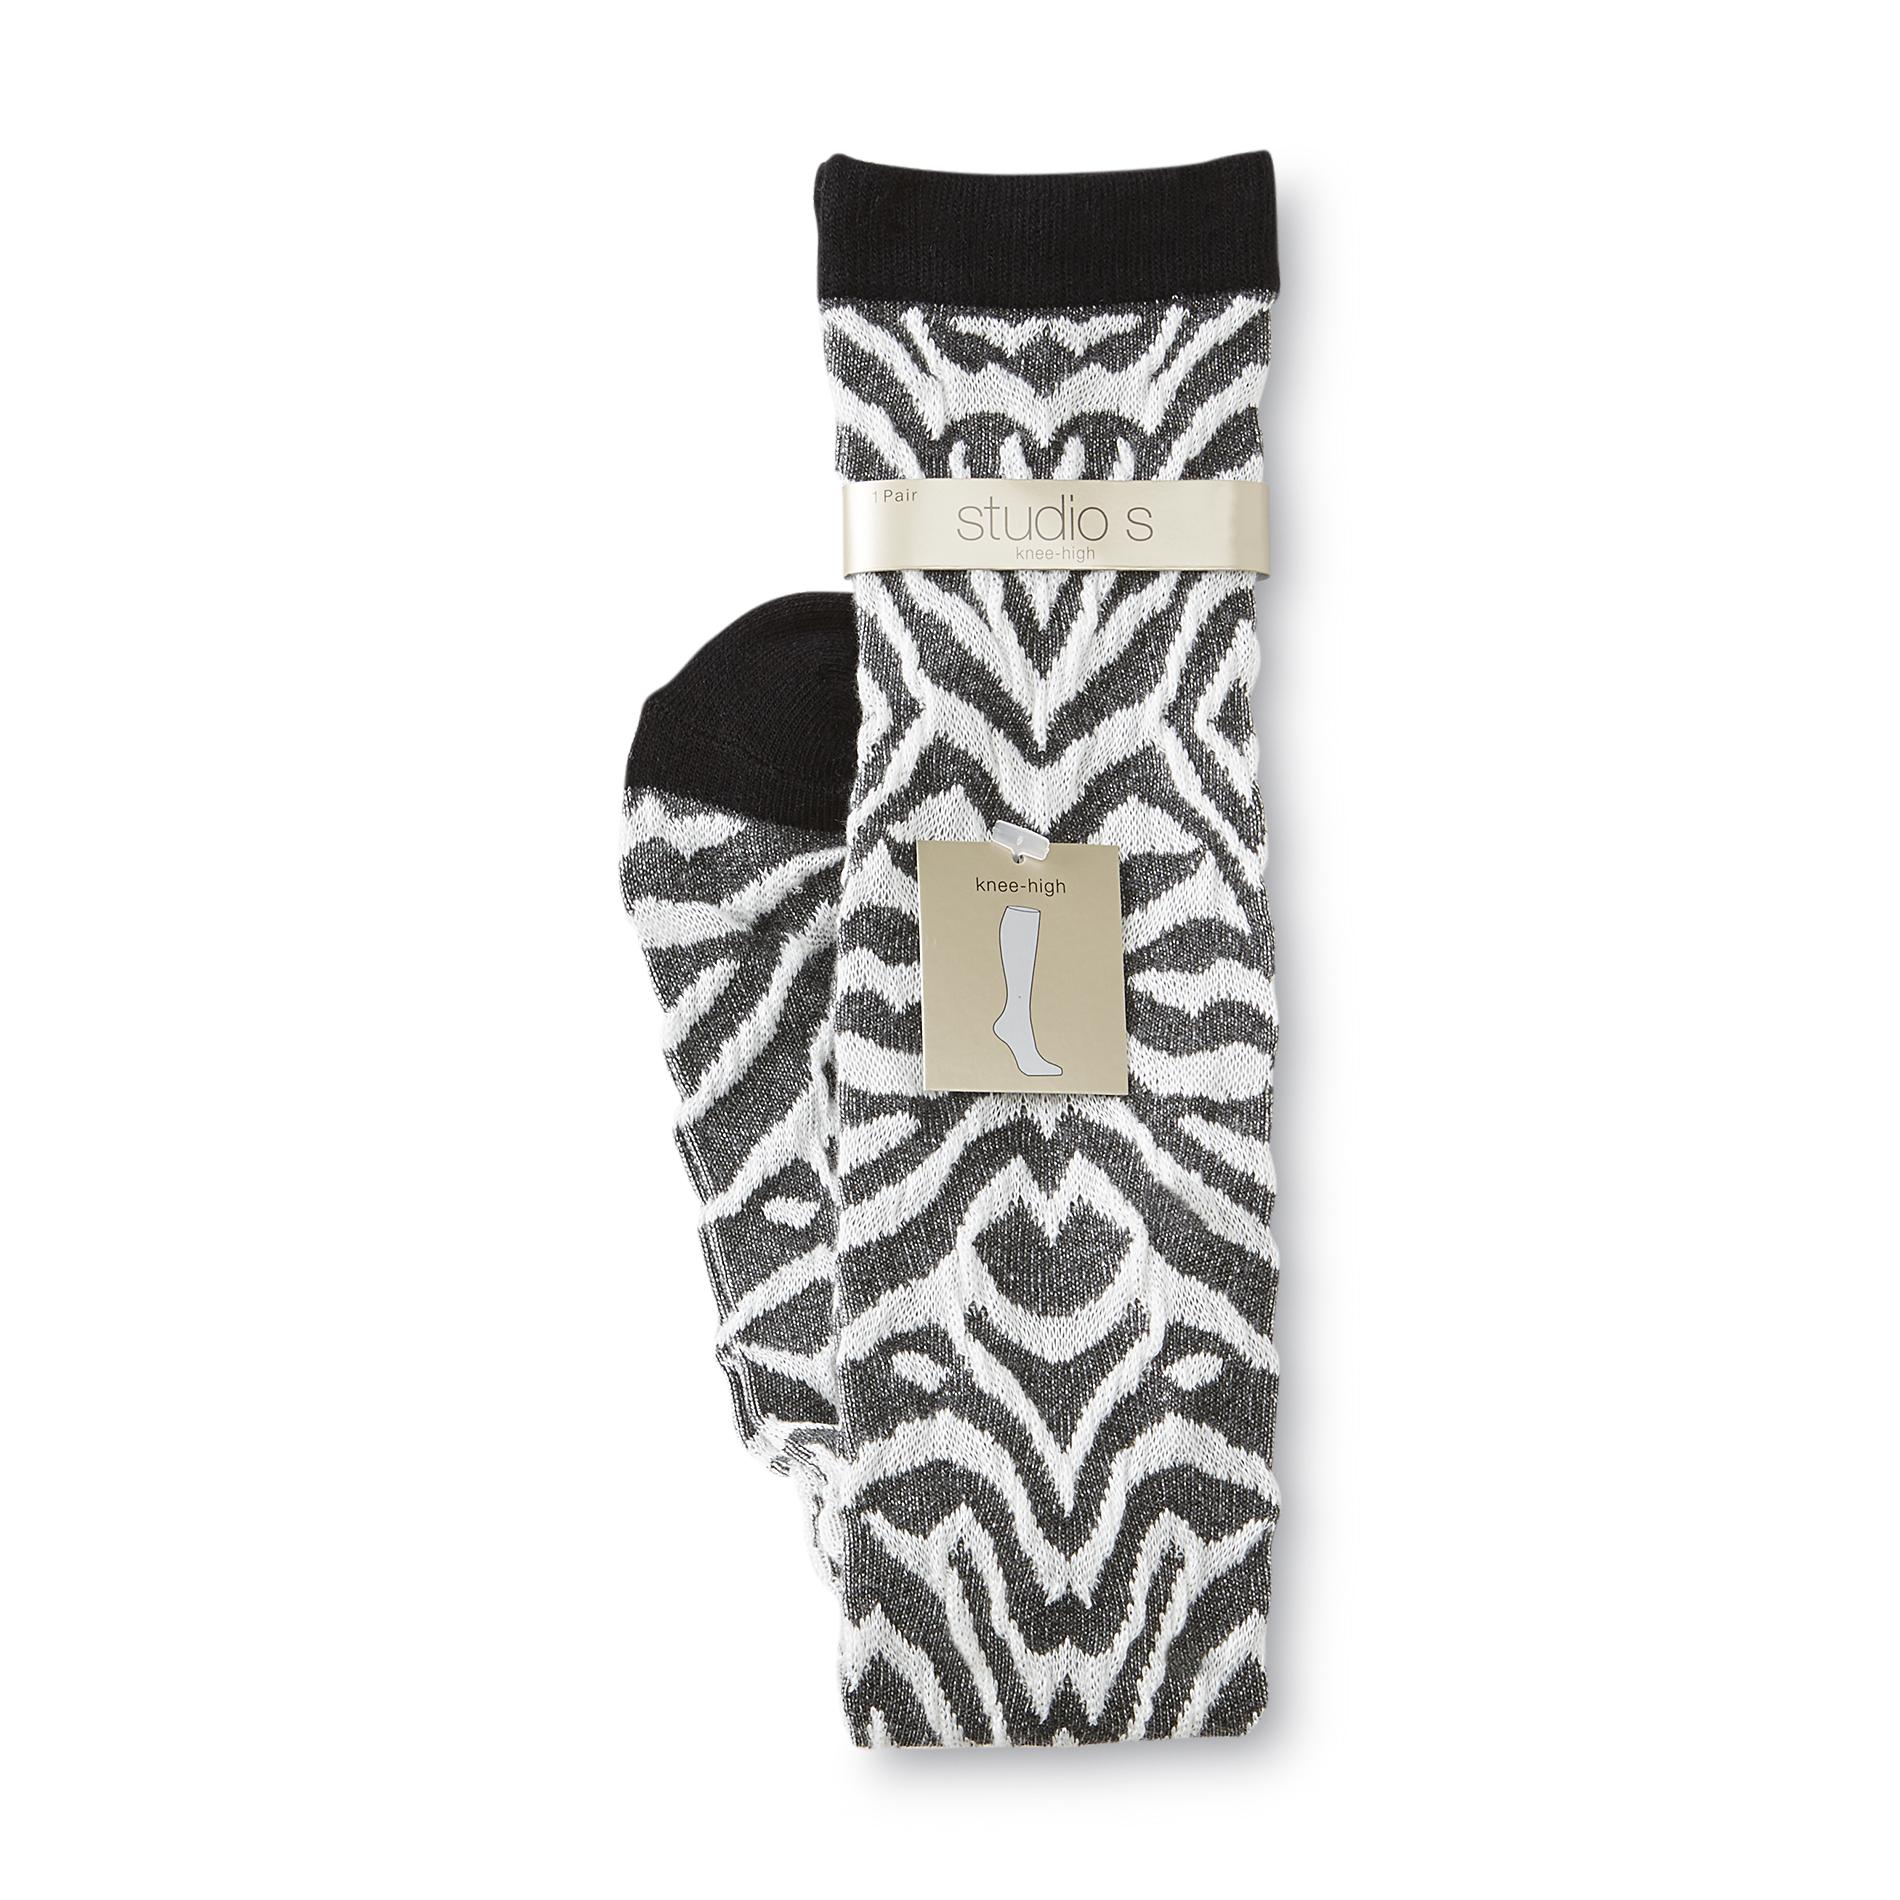 Studio S Women's Knee-High Socks - Zebra Print